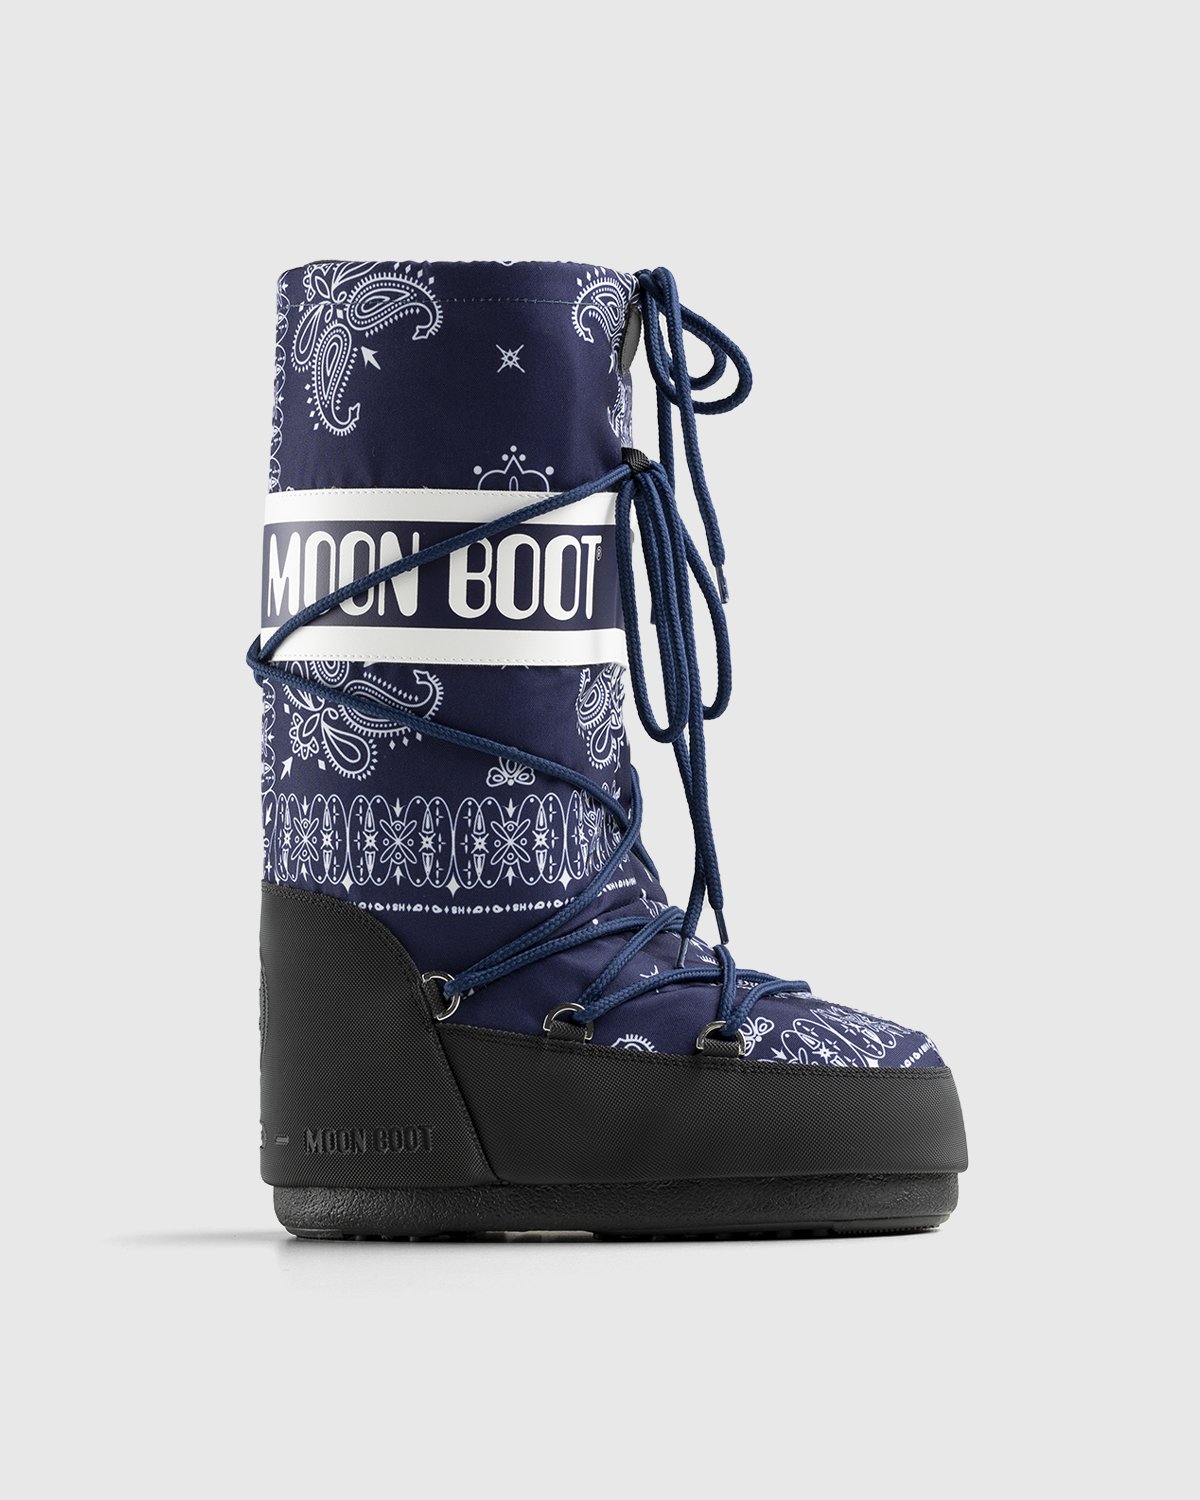 Precede shirt Rationalization Moon Boot x Highsnobiety – Icon Boot Bandana Blue | Highsnobiety Shop